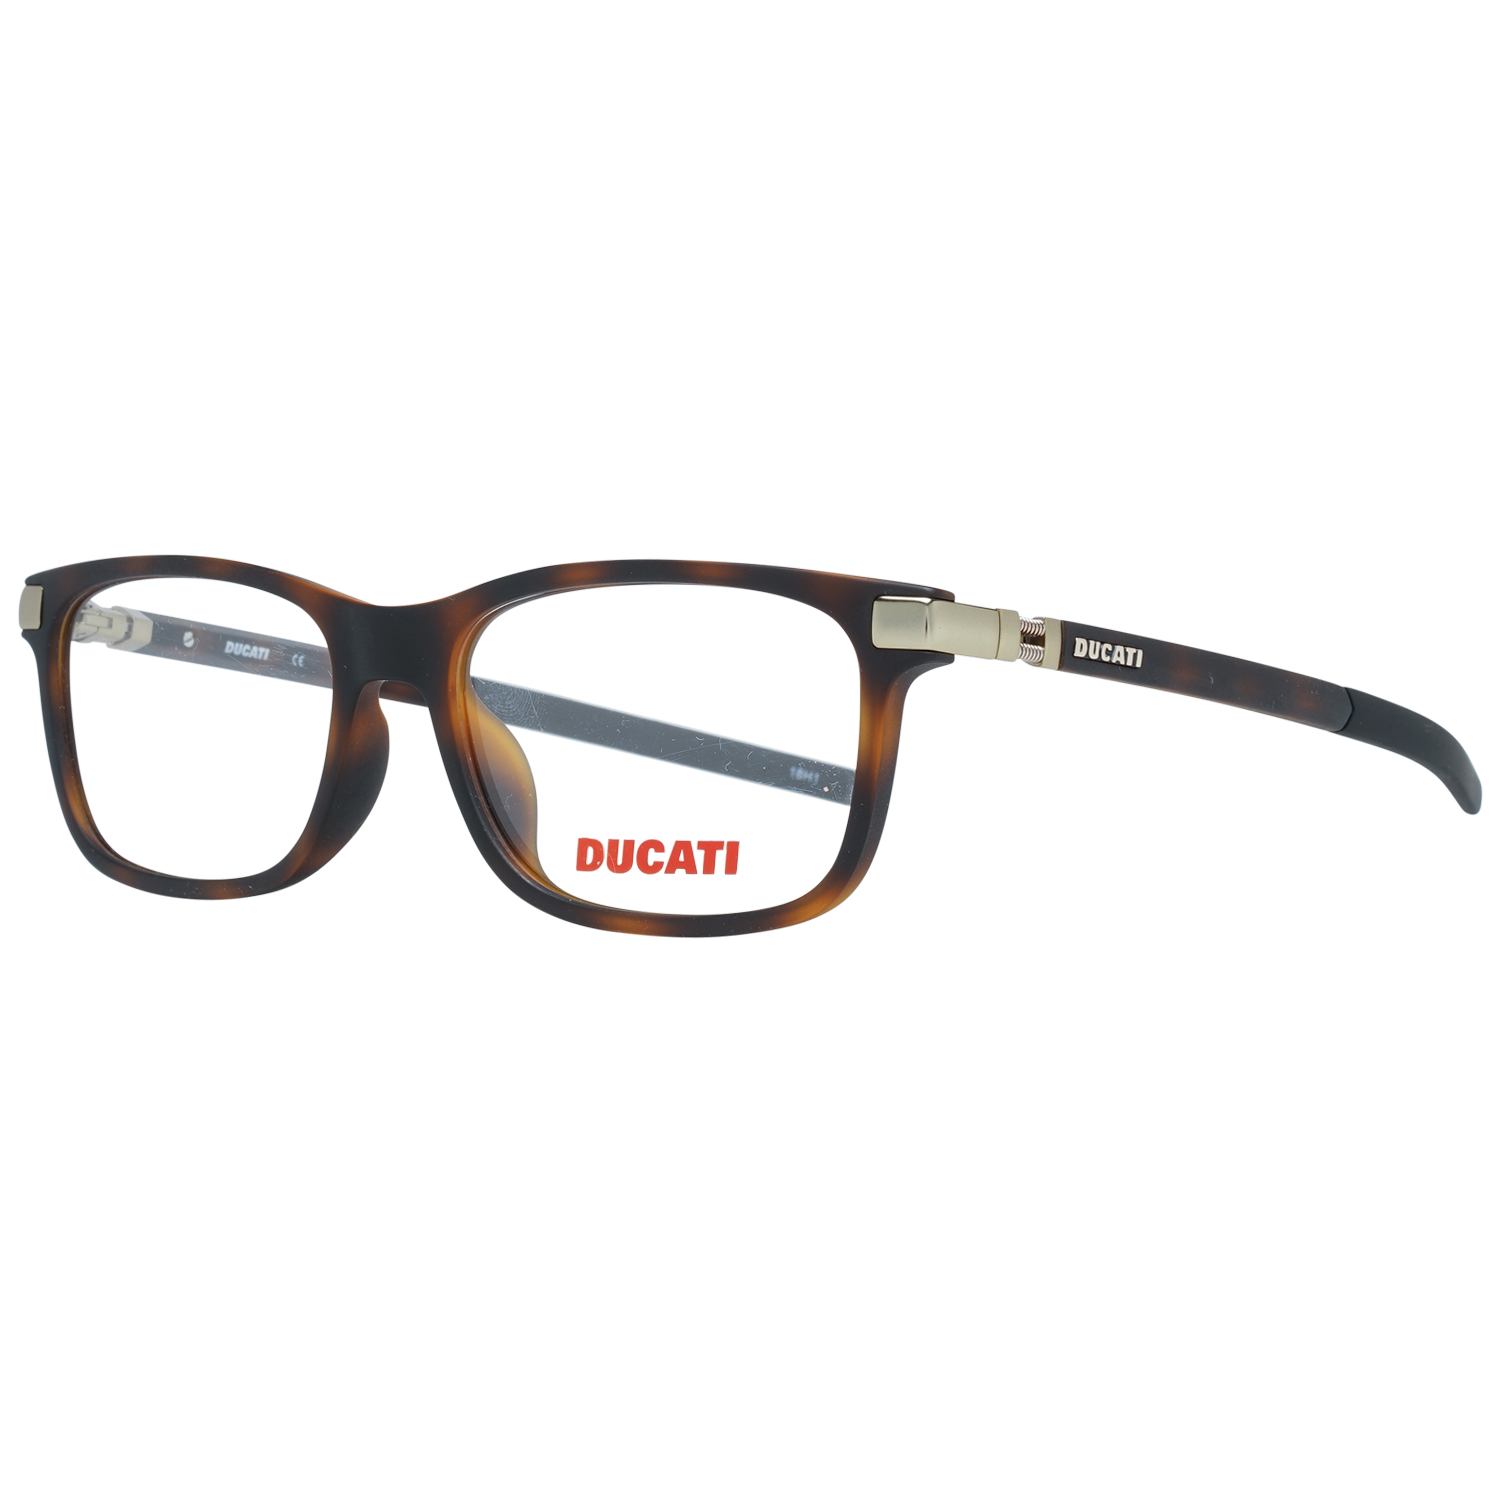 Ducati Frames Ducati Optical Frame DA1006 400 55 Eyeglasses Eyewear UK USA Australia 